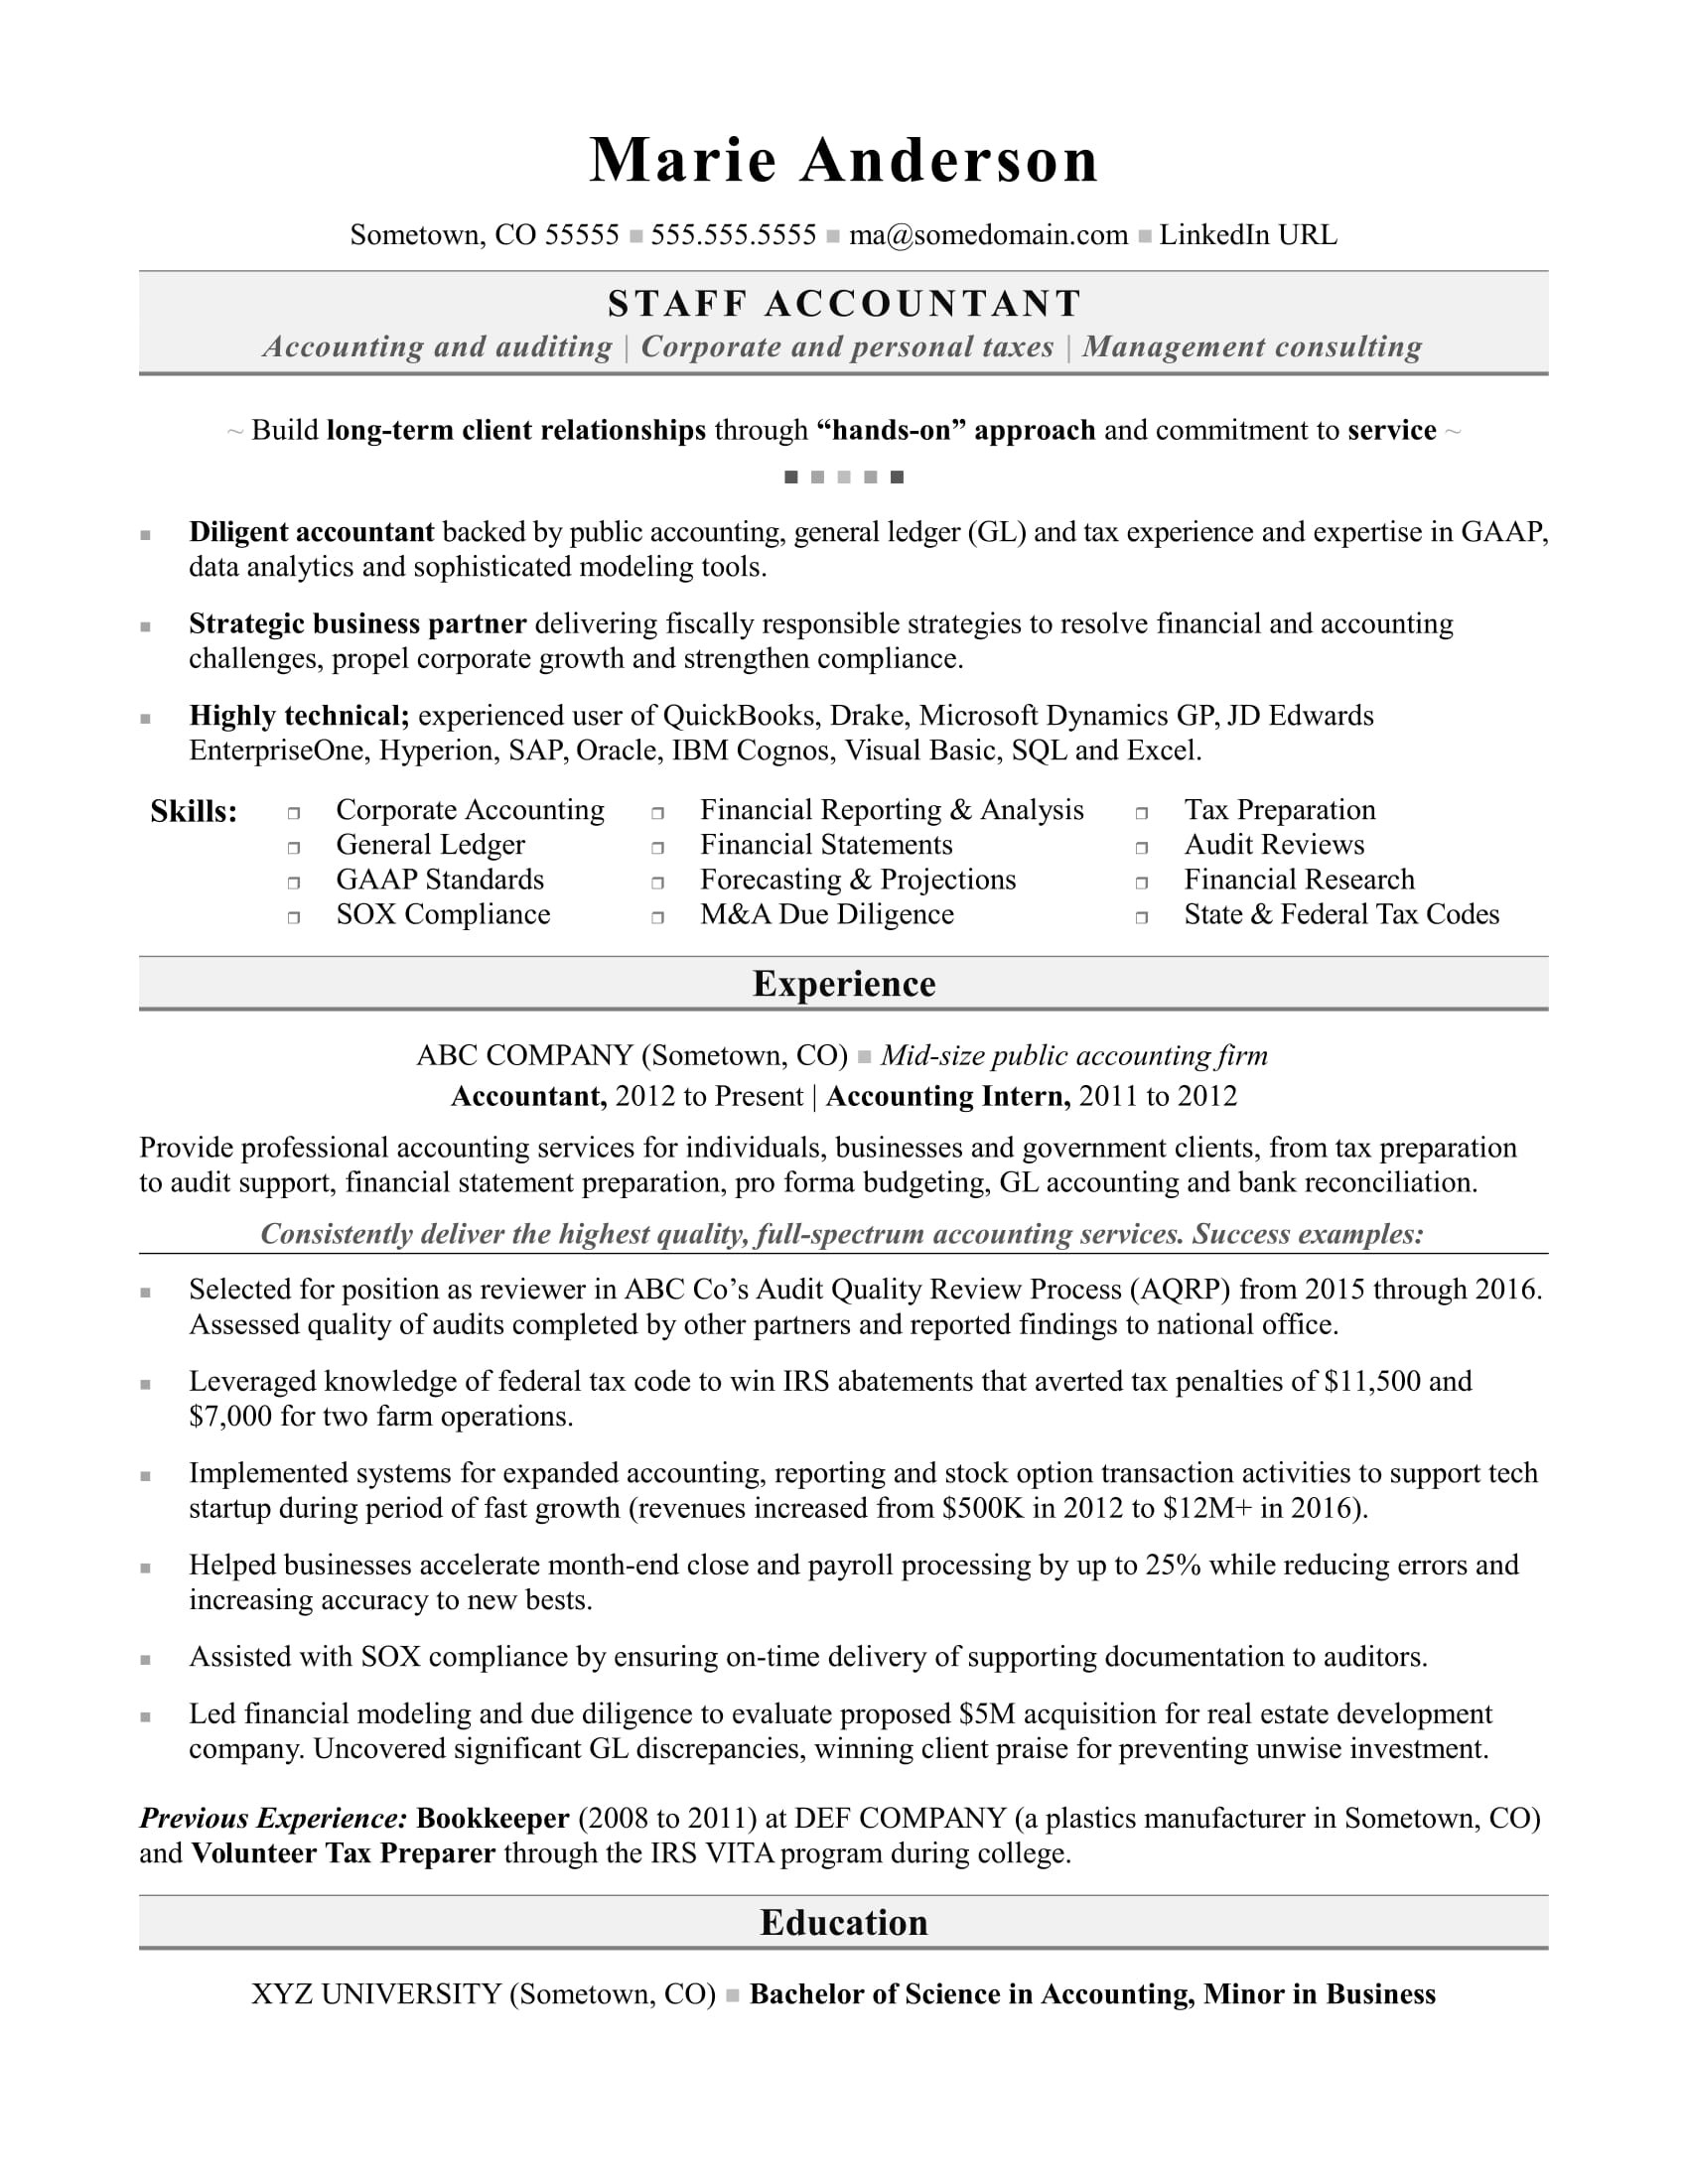 General Ledger Pl Sql Resume Samples Accountant Resume Monster.com